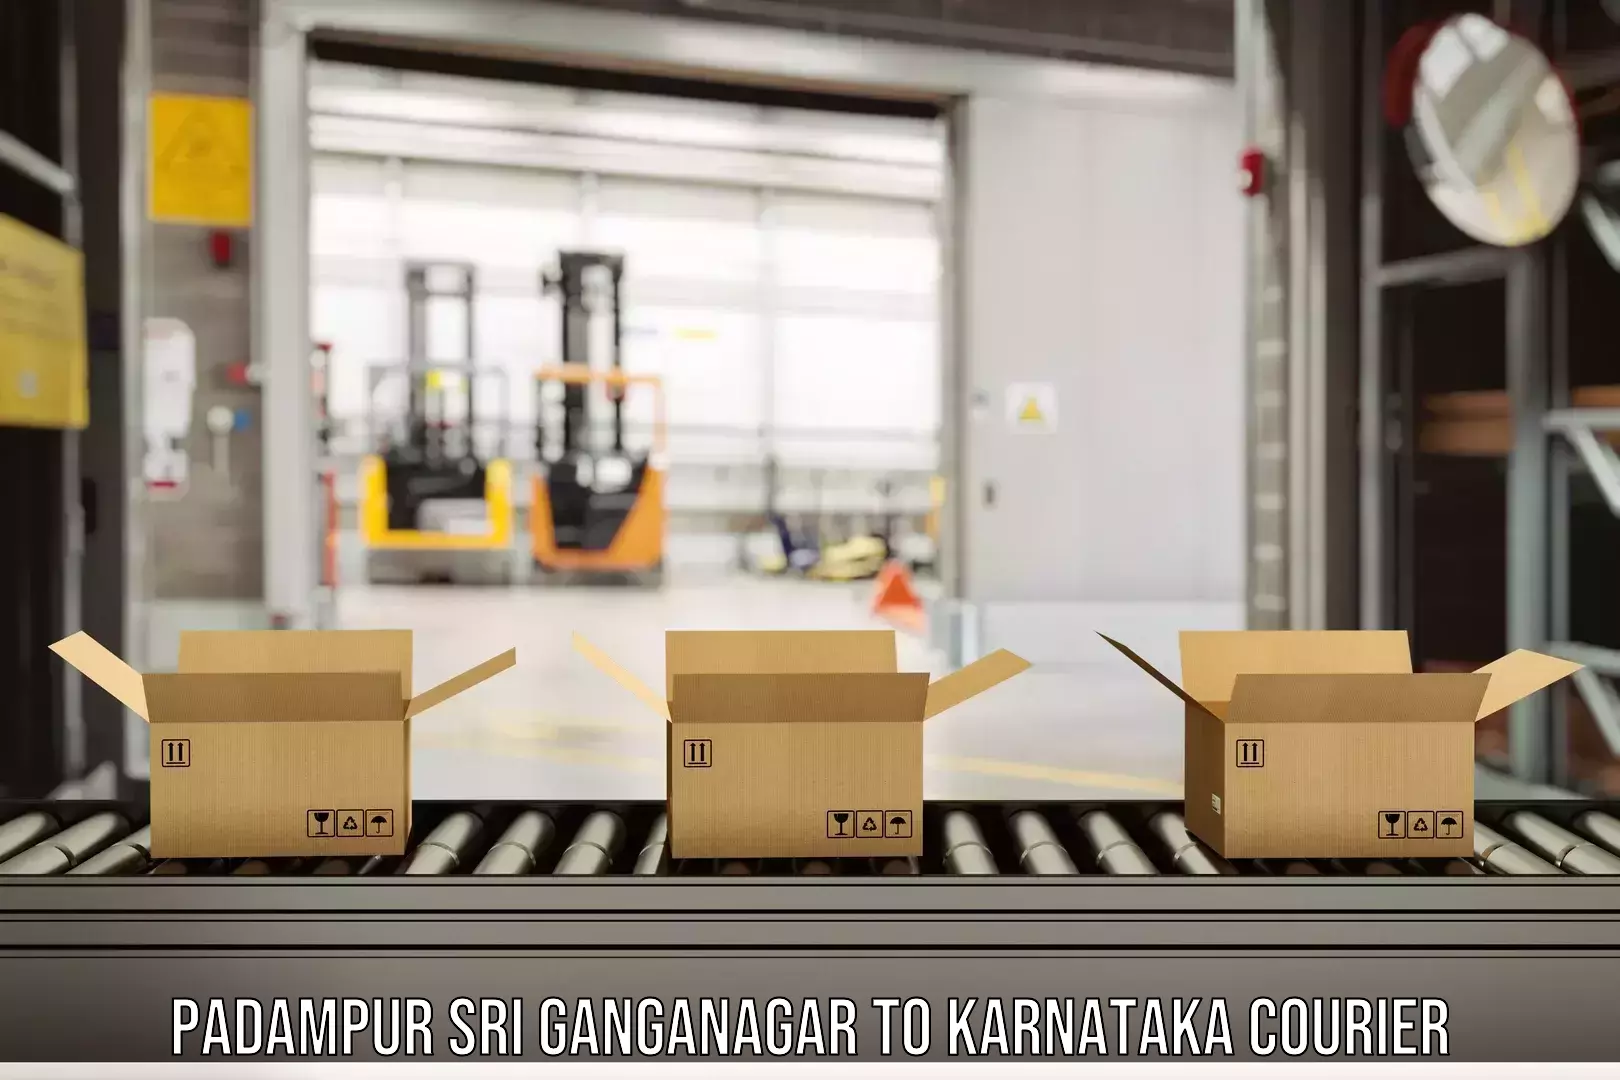 Express delivery capabilities Padampur Sri Ganganagar to Srirangapatna